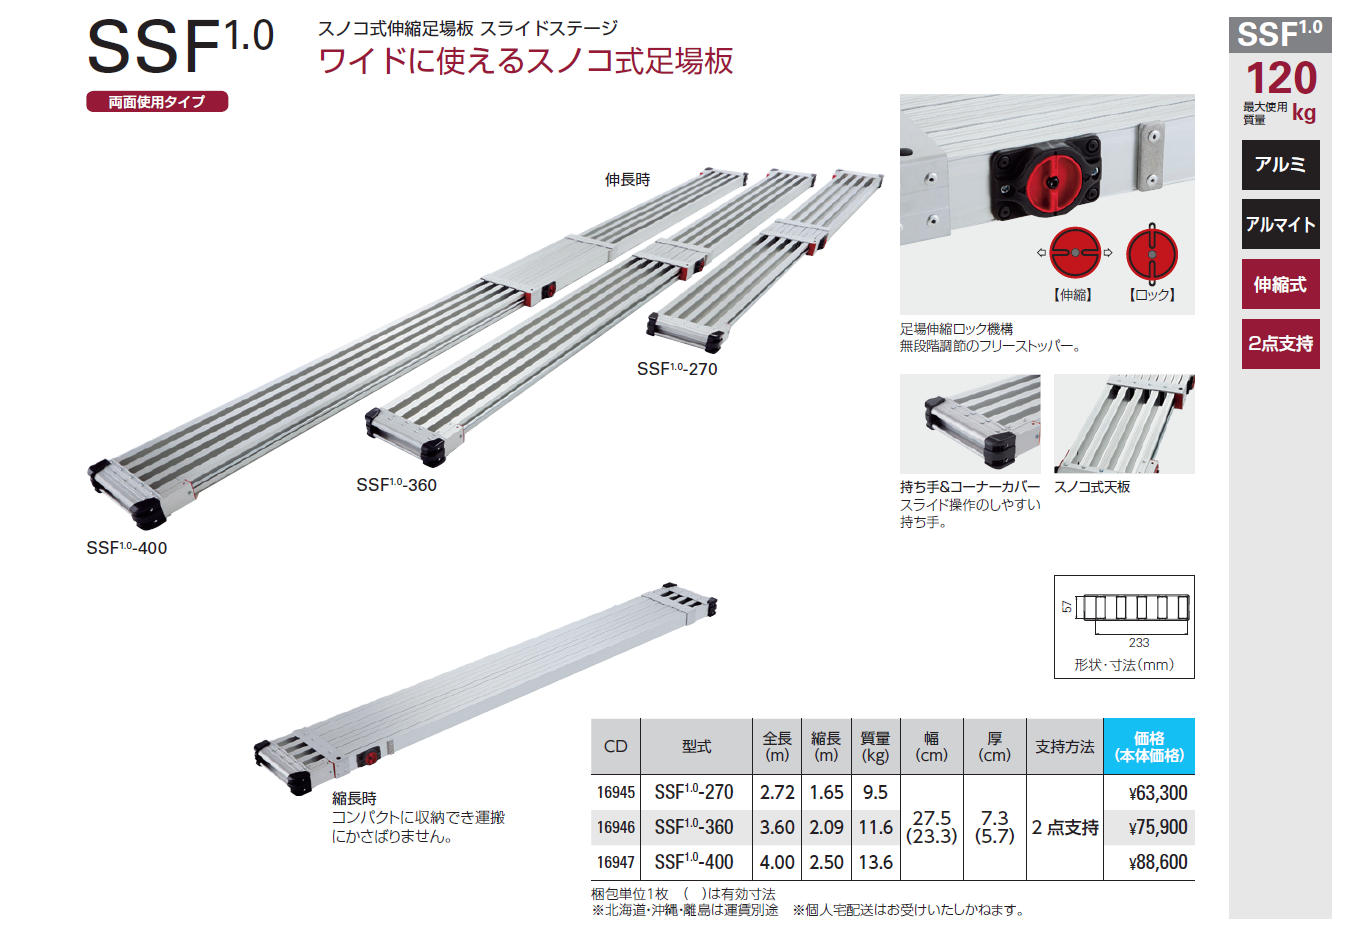 足場板 SSF1.0-270 足場板 スノコ式 2点支持 伸縮 2.72m 長谷川工業 hasegawa 通販